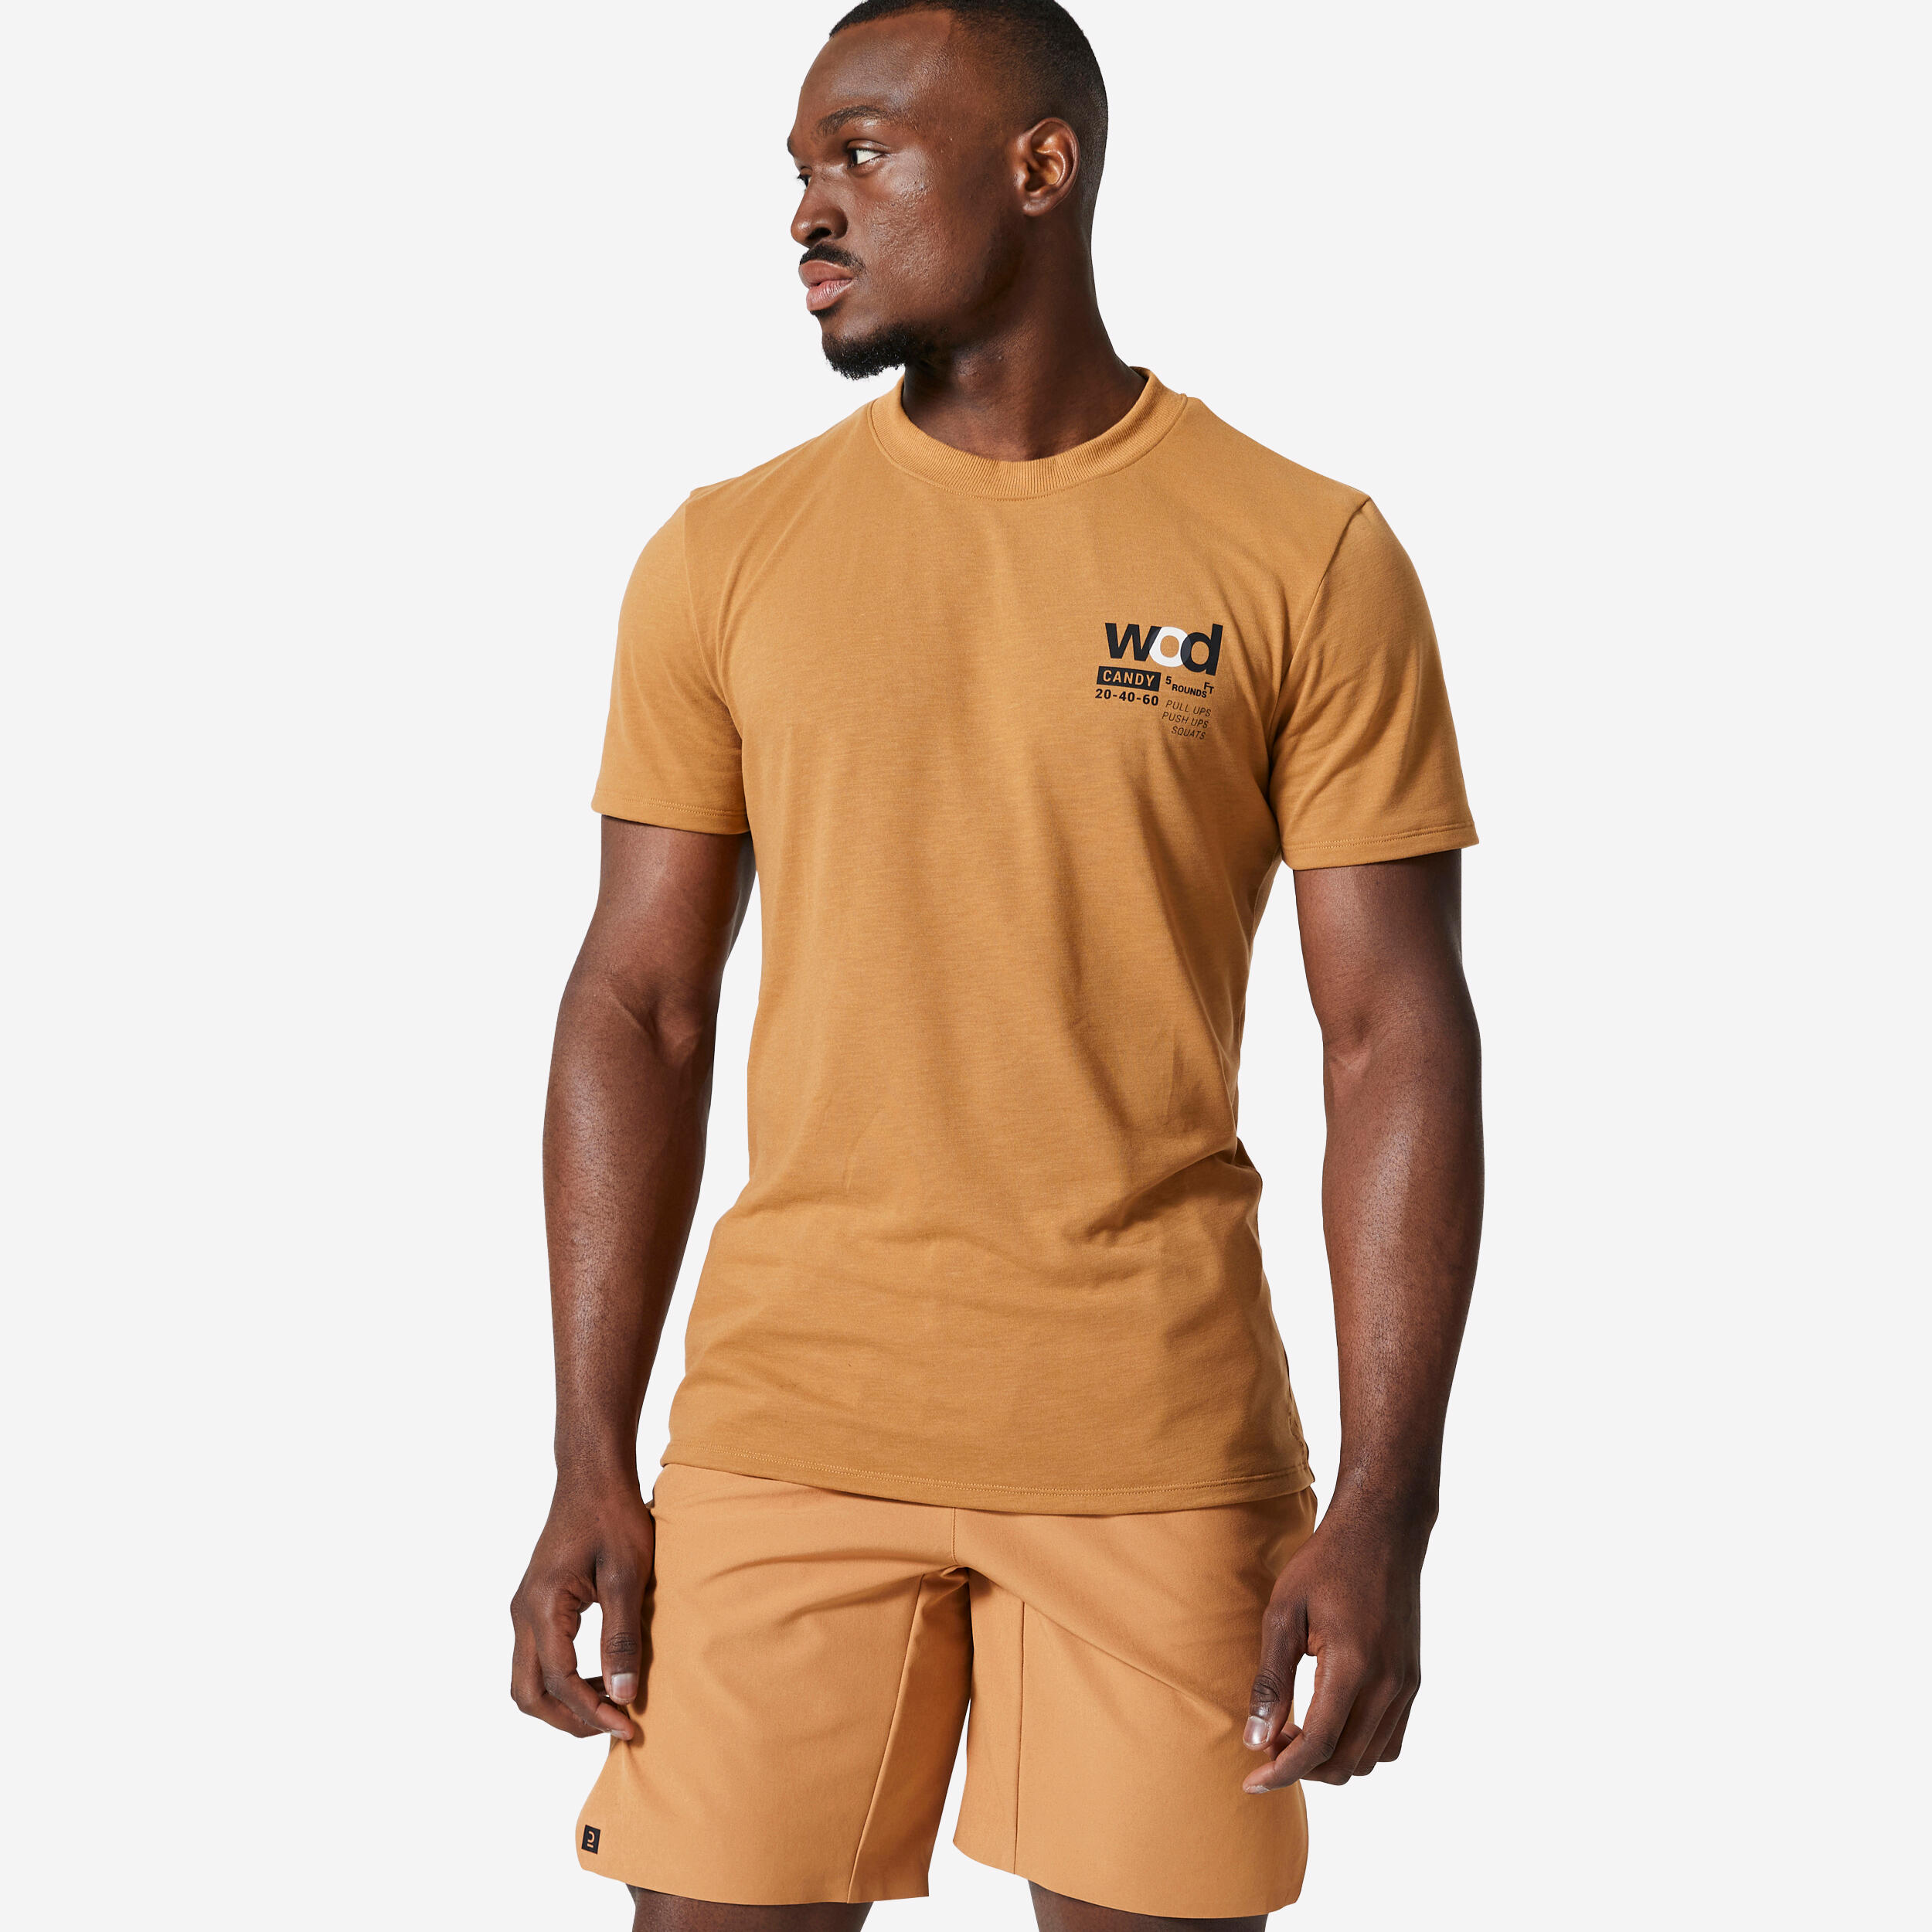 DOMYOS Men's Crew Neck Breathable Soft Slim-Fit Cross Training T-Shirt - Hazelnut